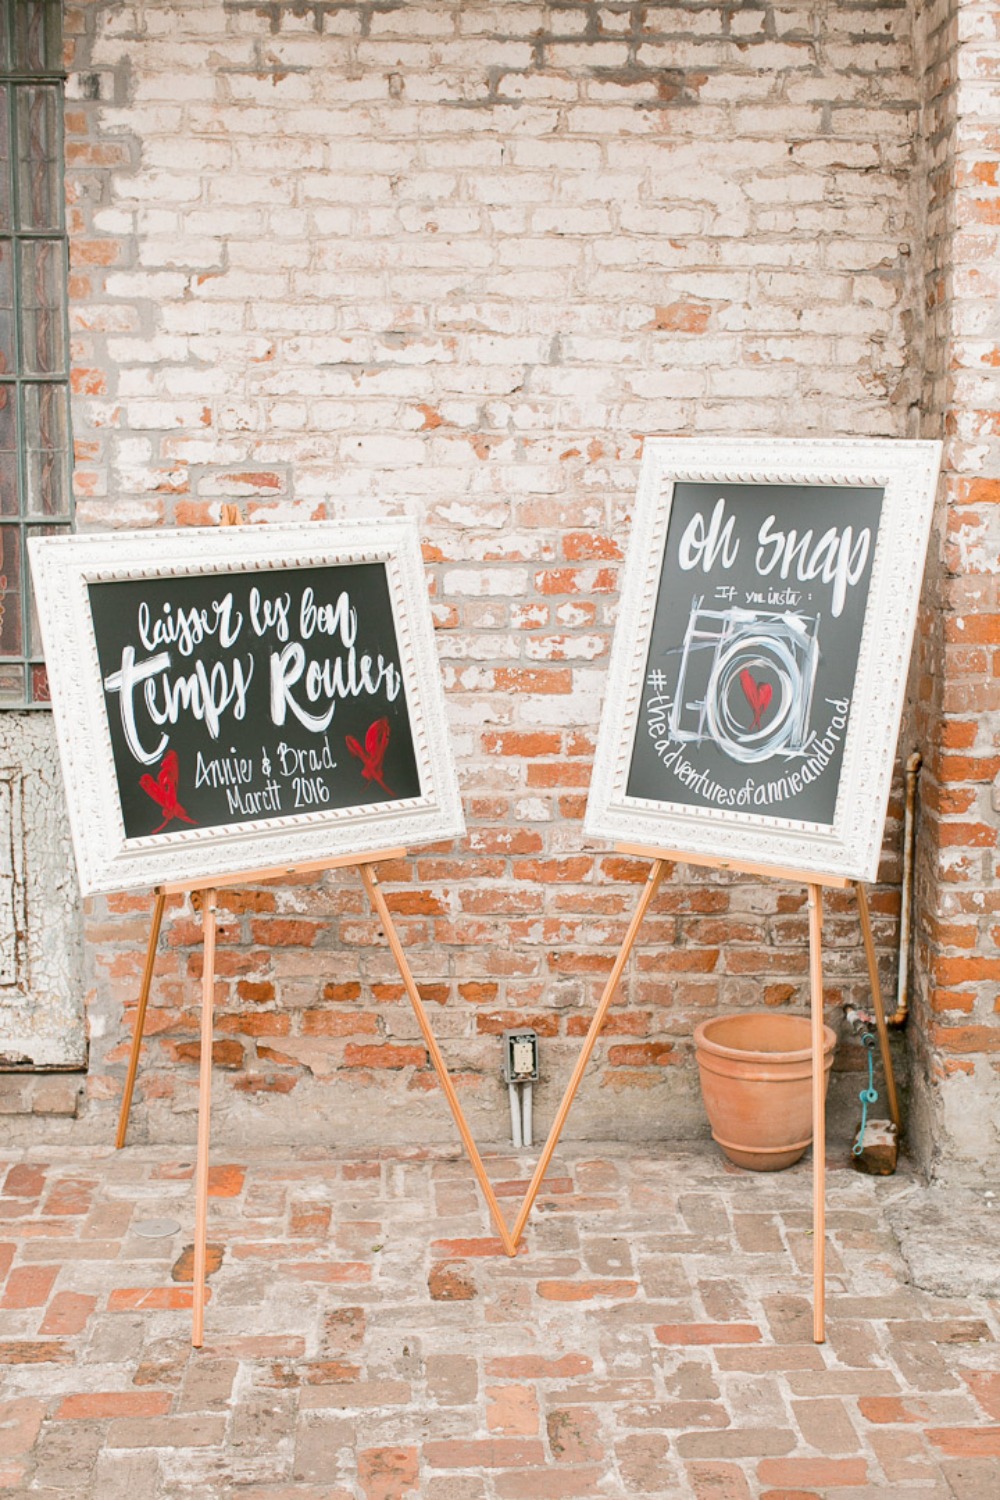 cute framed wedding sign and instagram sign